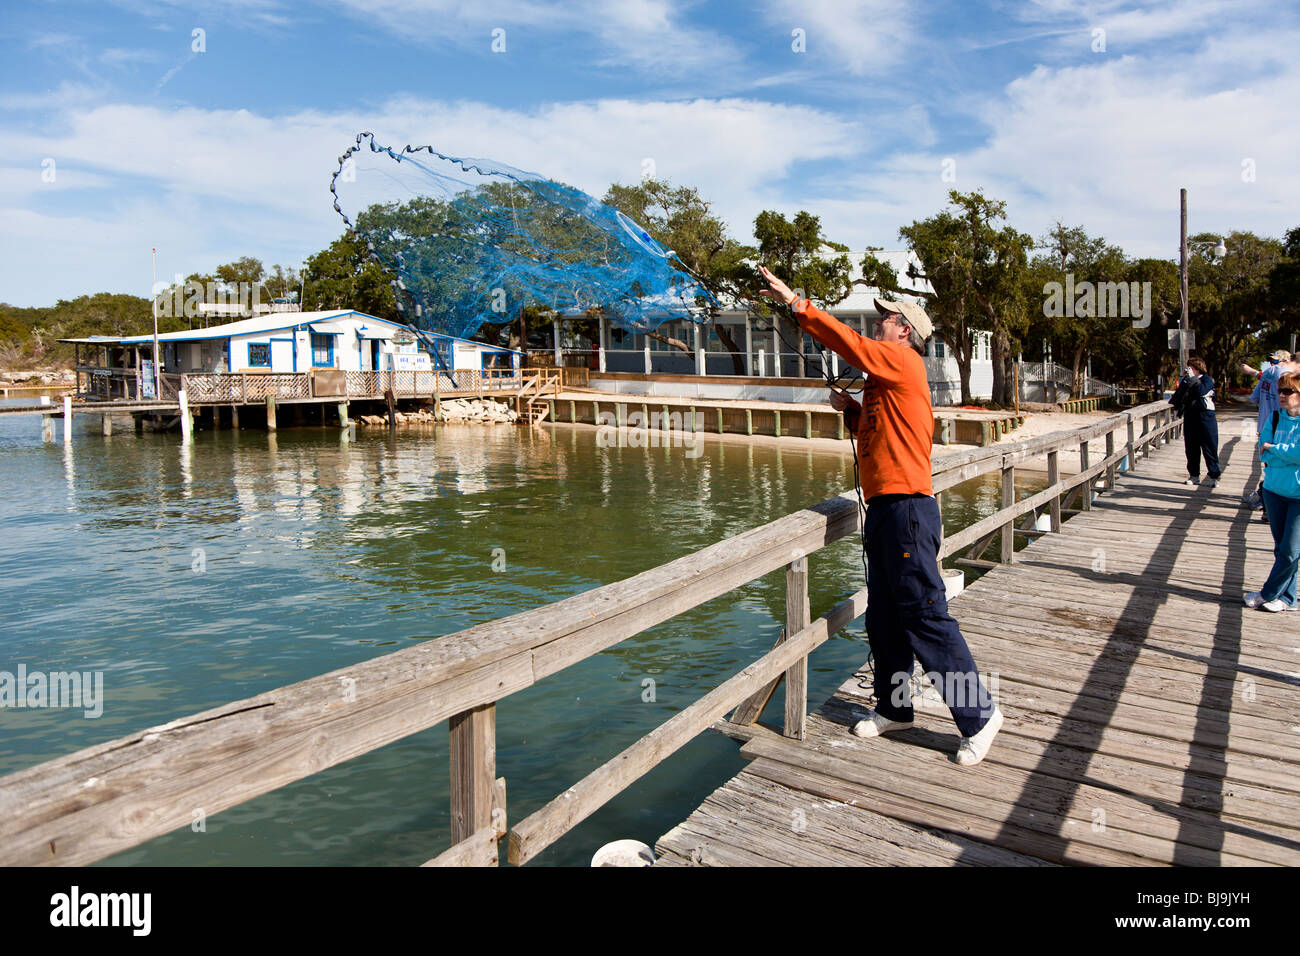 Vilano Beach, FL - 2009 - Man throws cast net from wooden dock into Tolomato River near St. Augustine, Florida Stock Photo